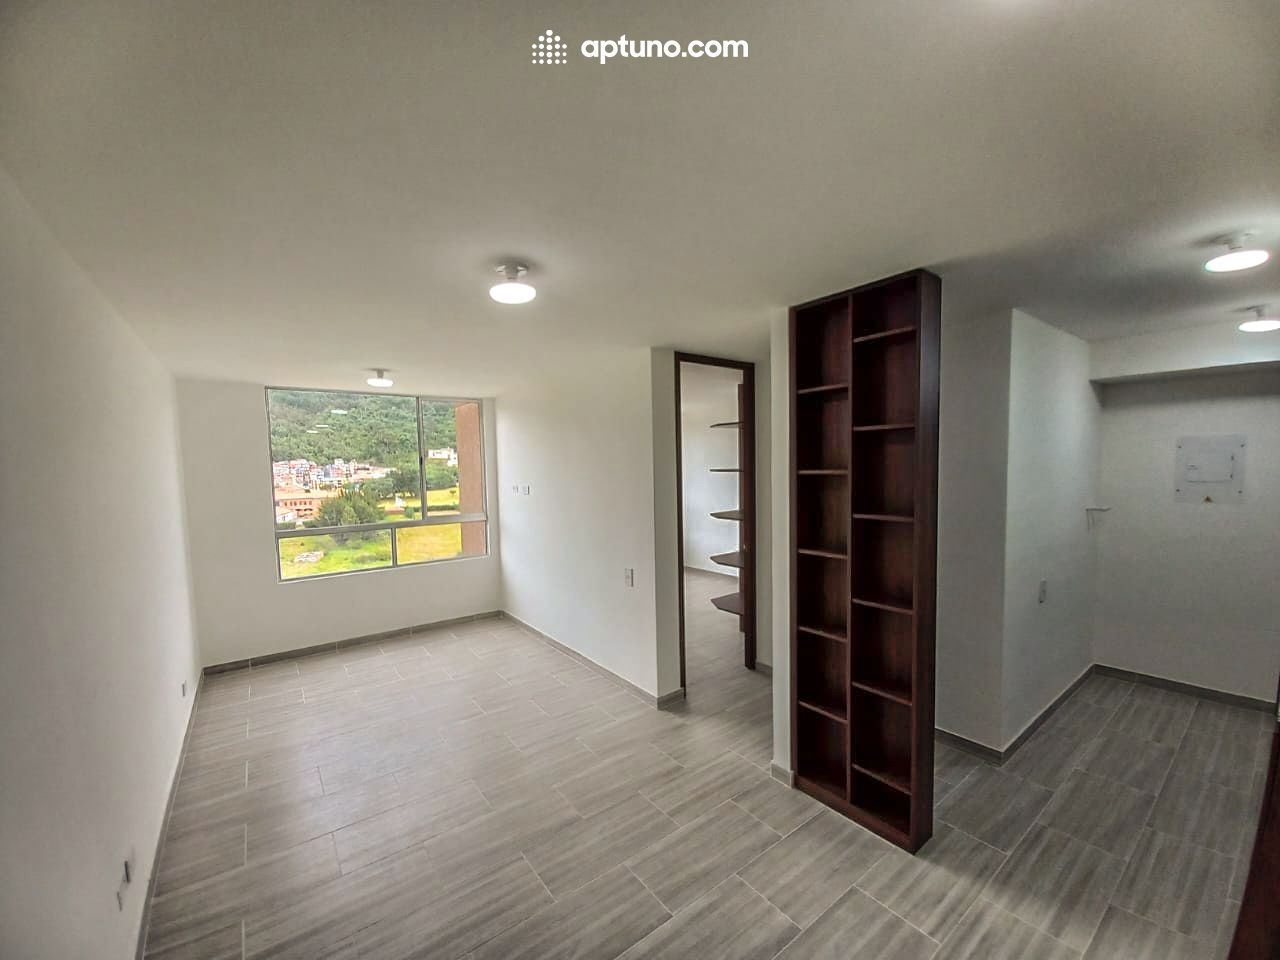 Apartamento en arriendo La Granja Norte 35 m² - $ 1.300.000